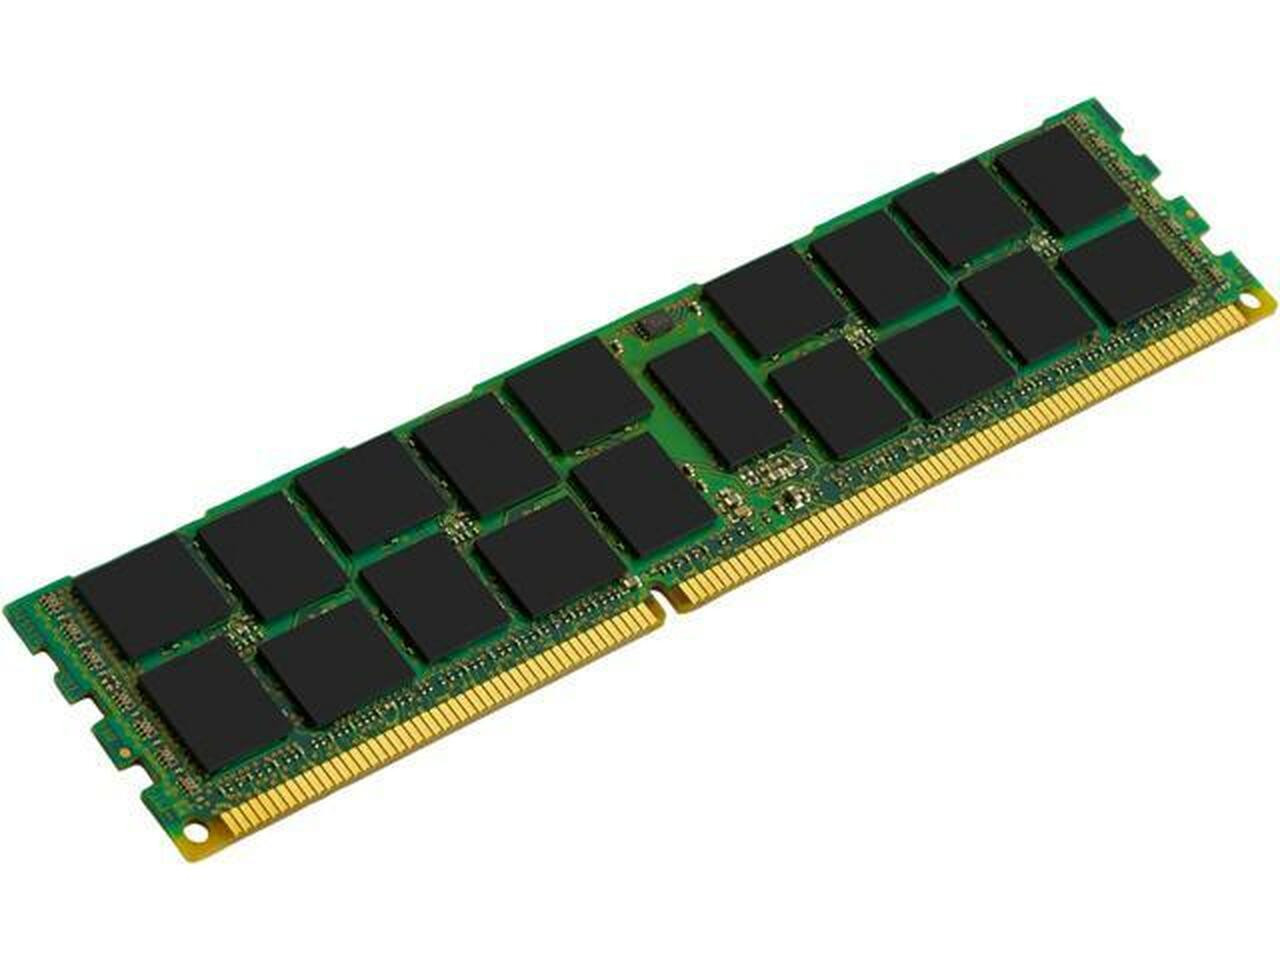 Netpatibles 4GB DDR3 SDRAM Memory Module - MEMDR340LHL03UN16NPM